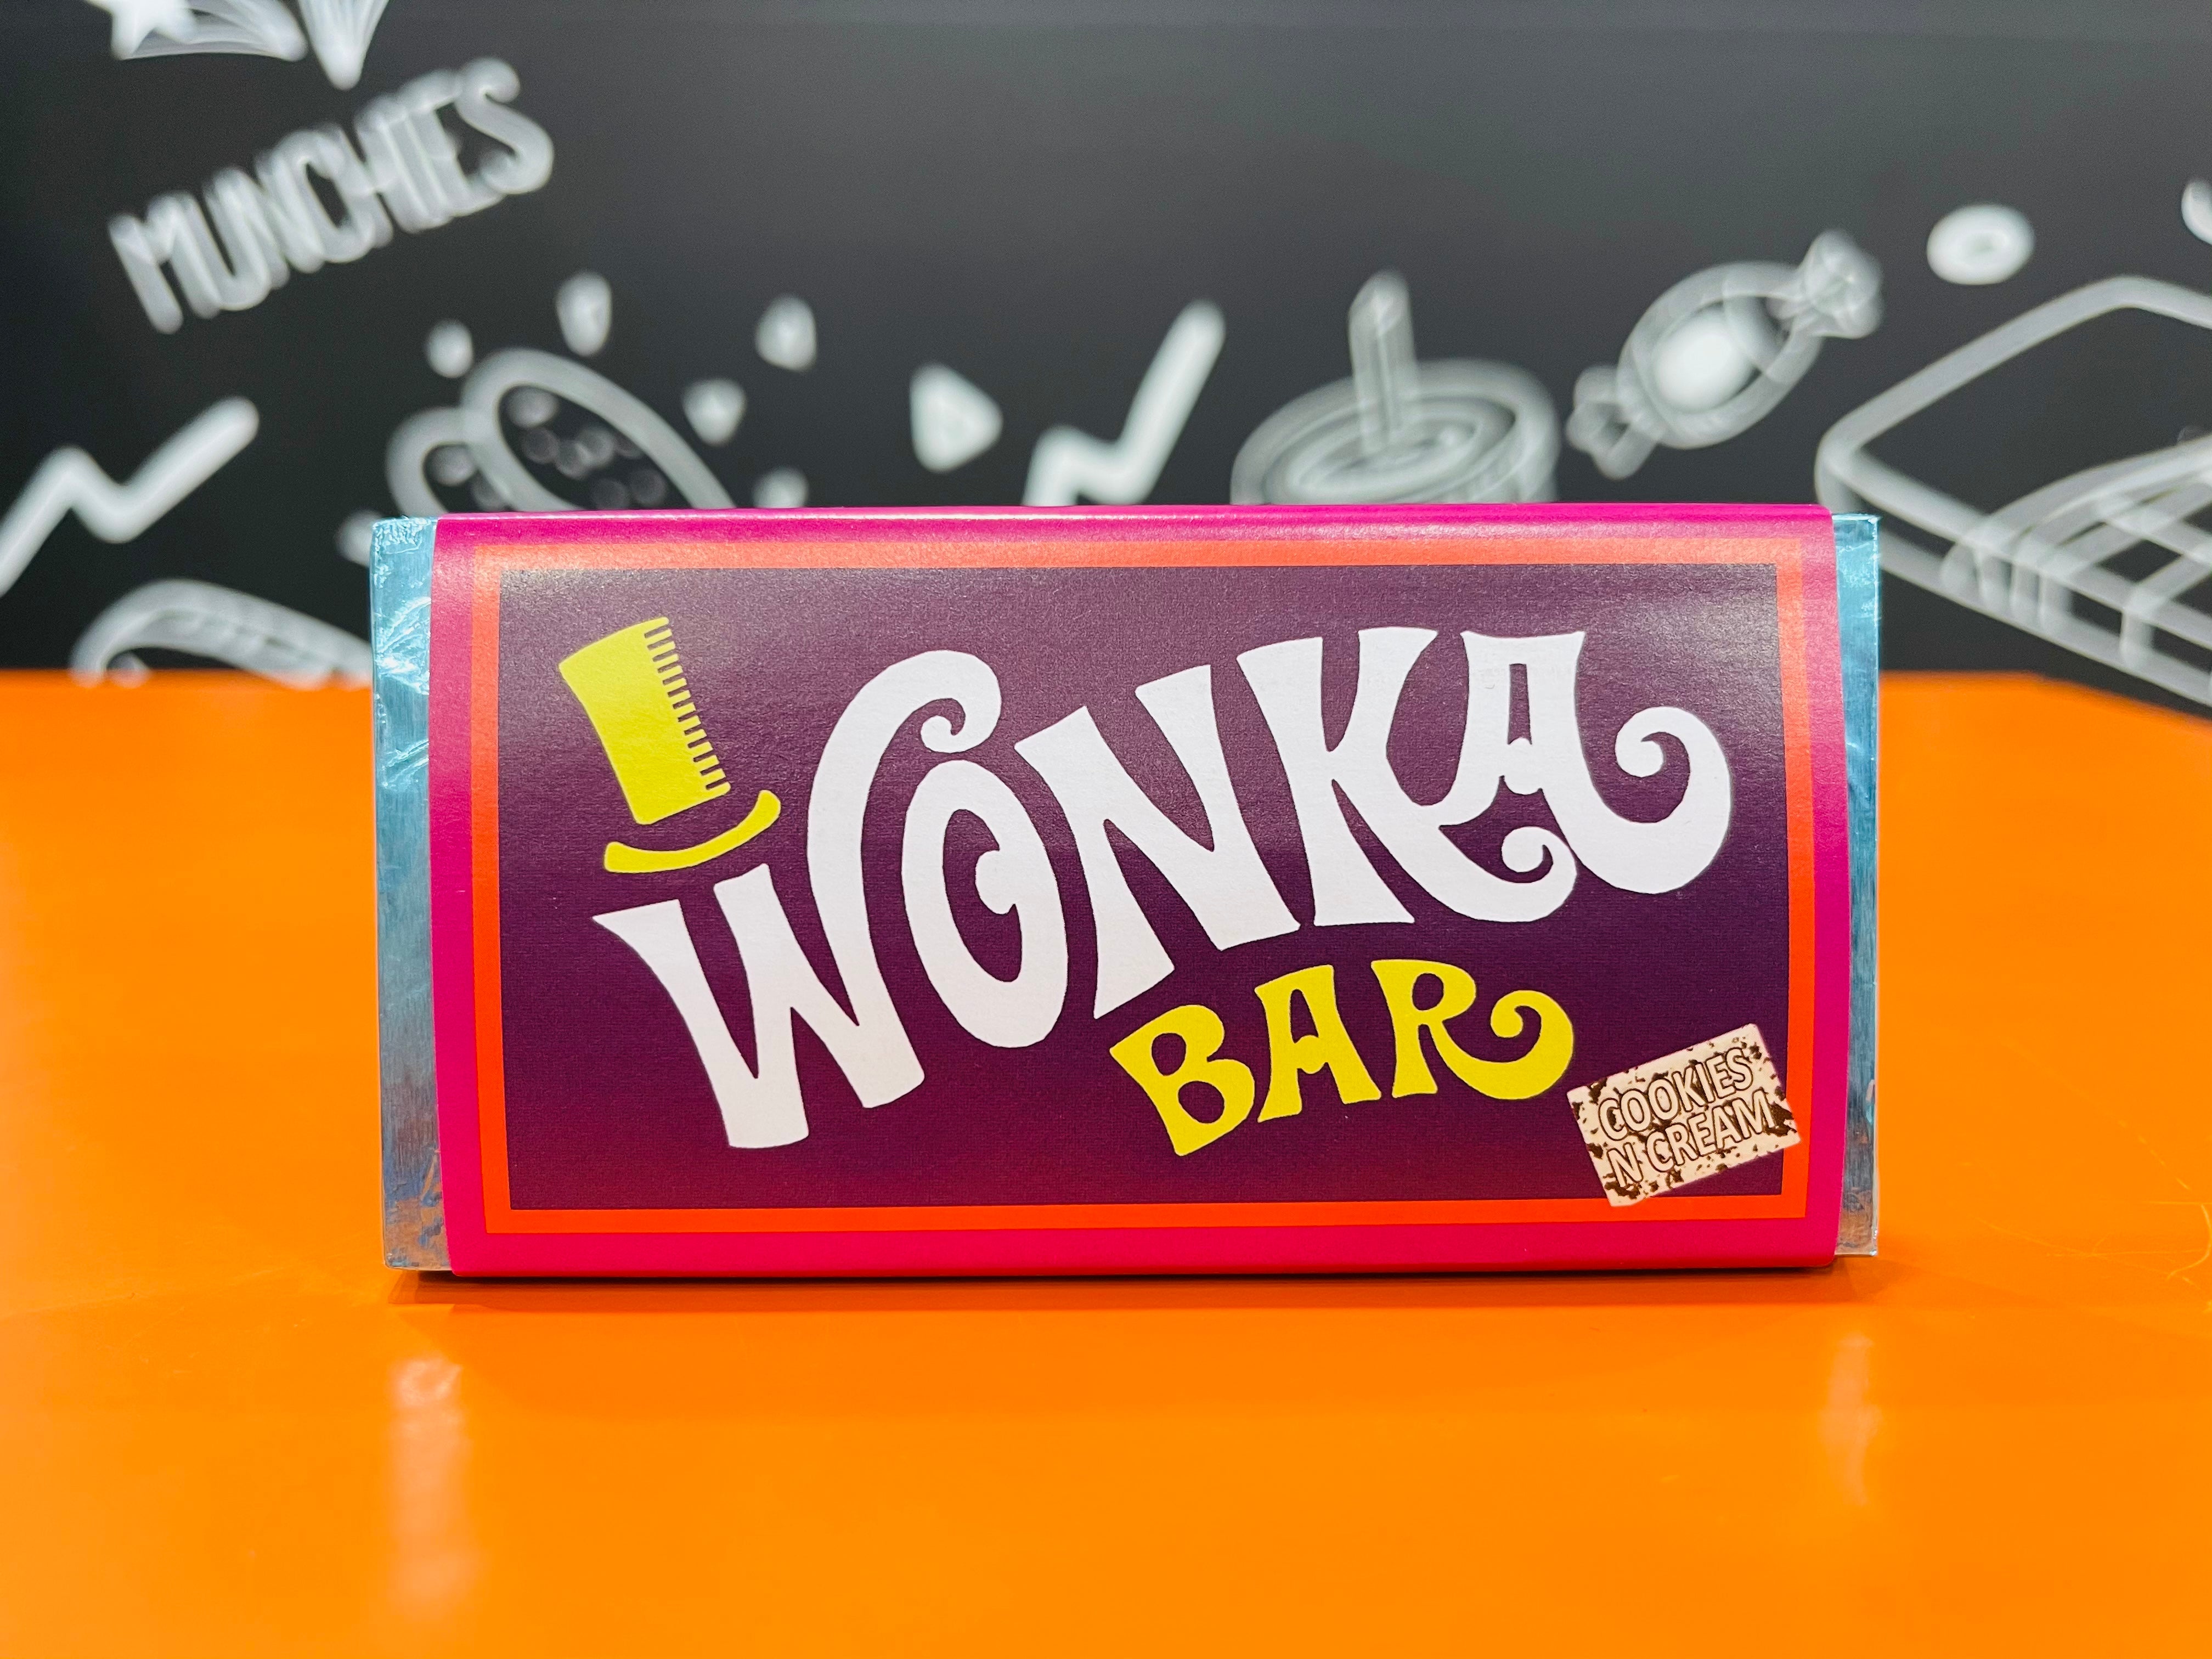 Wonka Bar Cookies n Cream